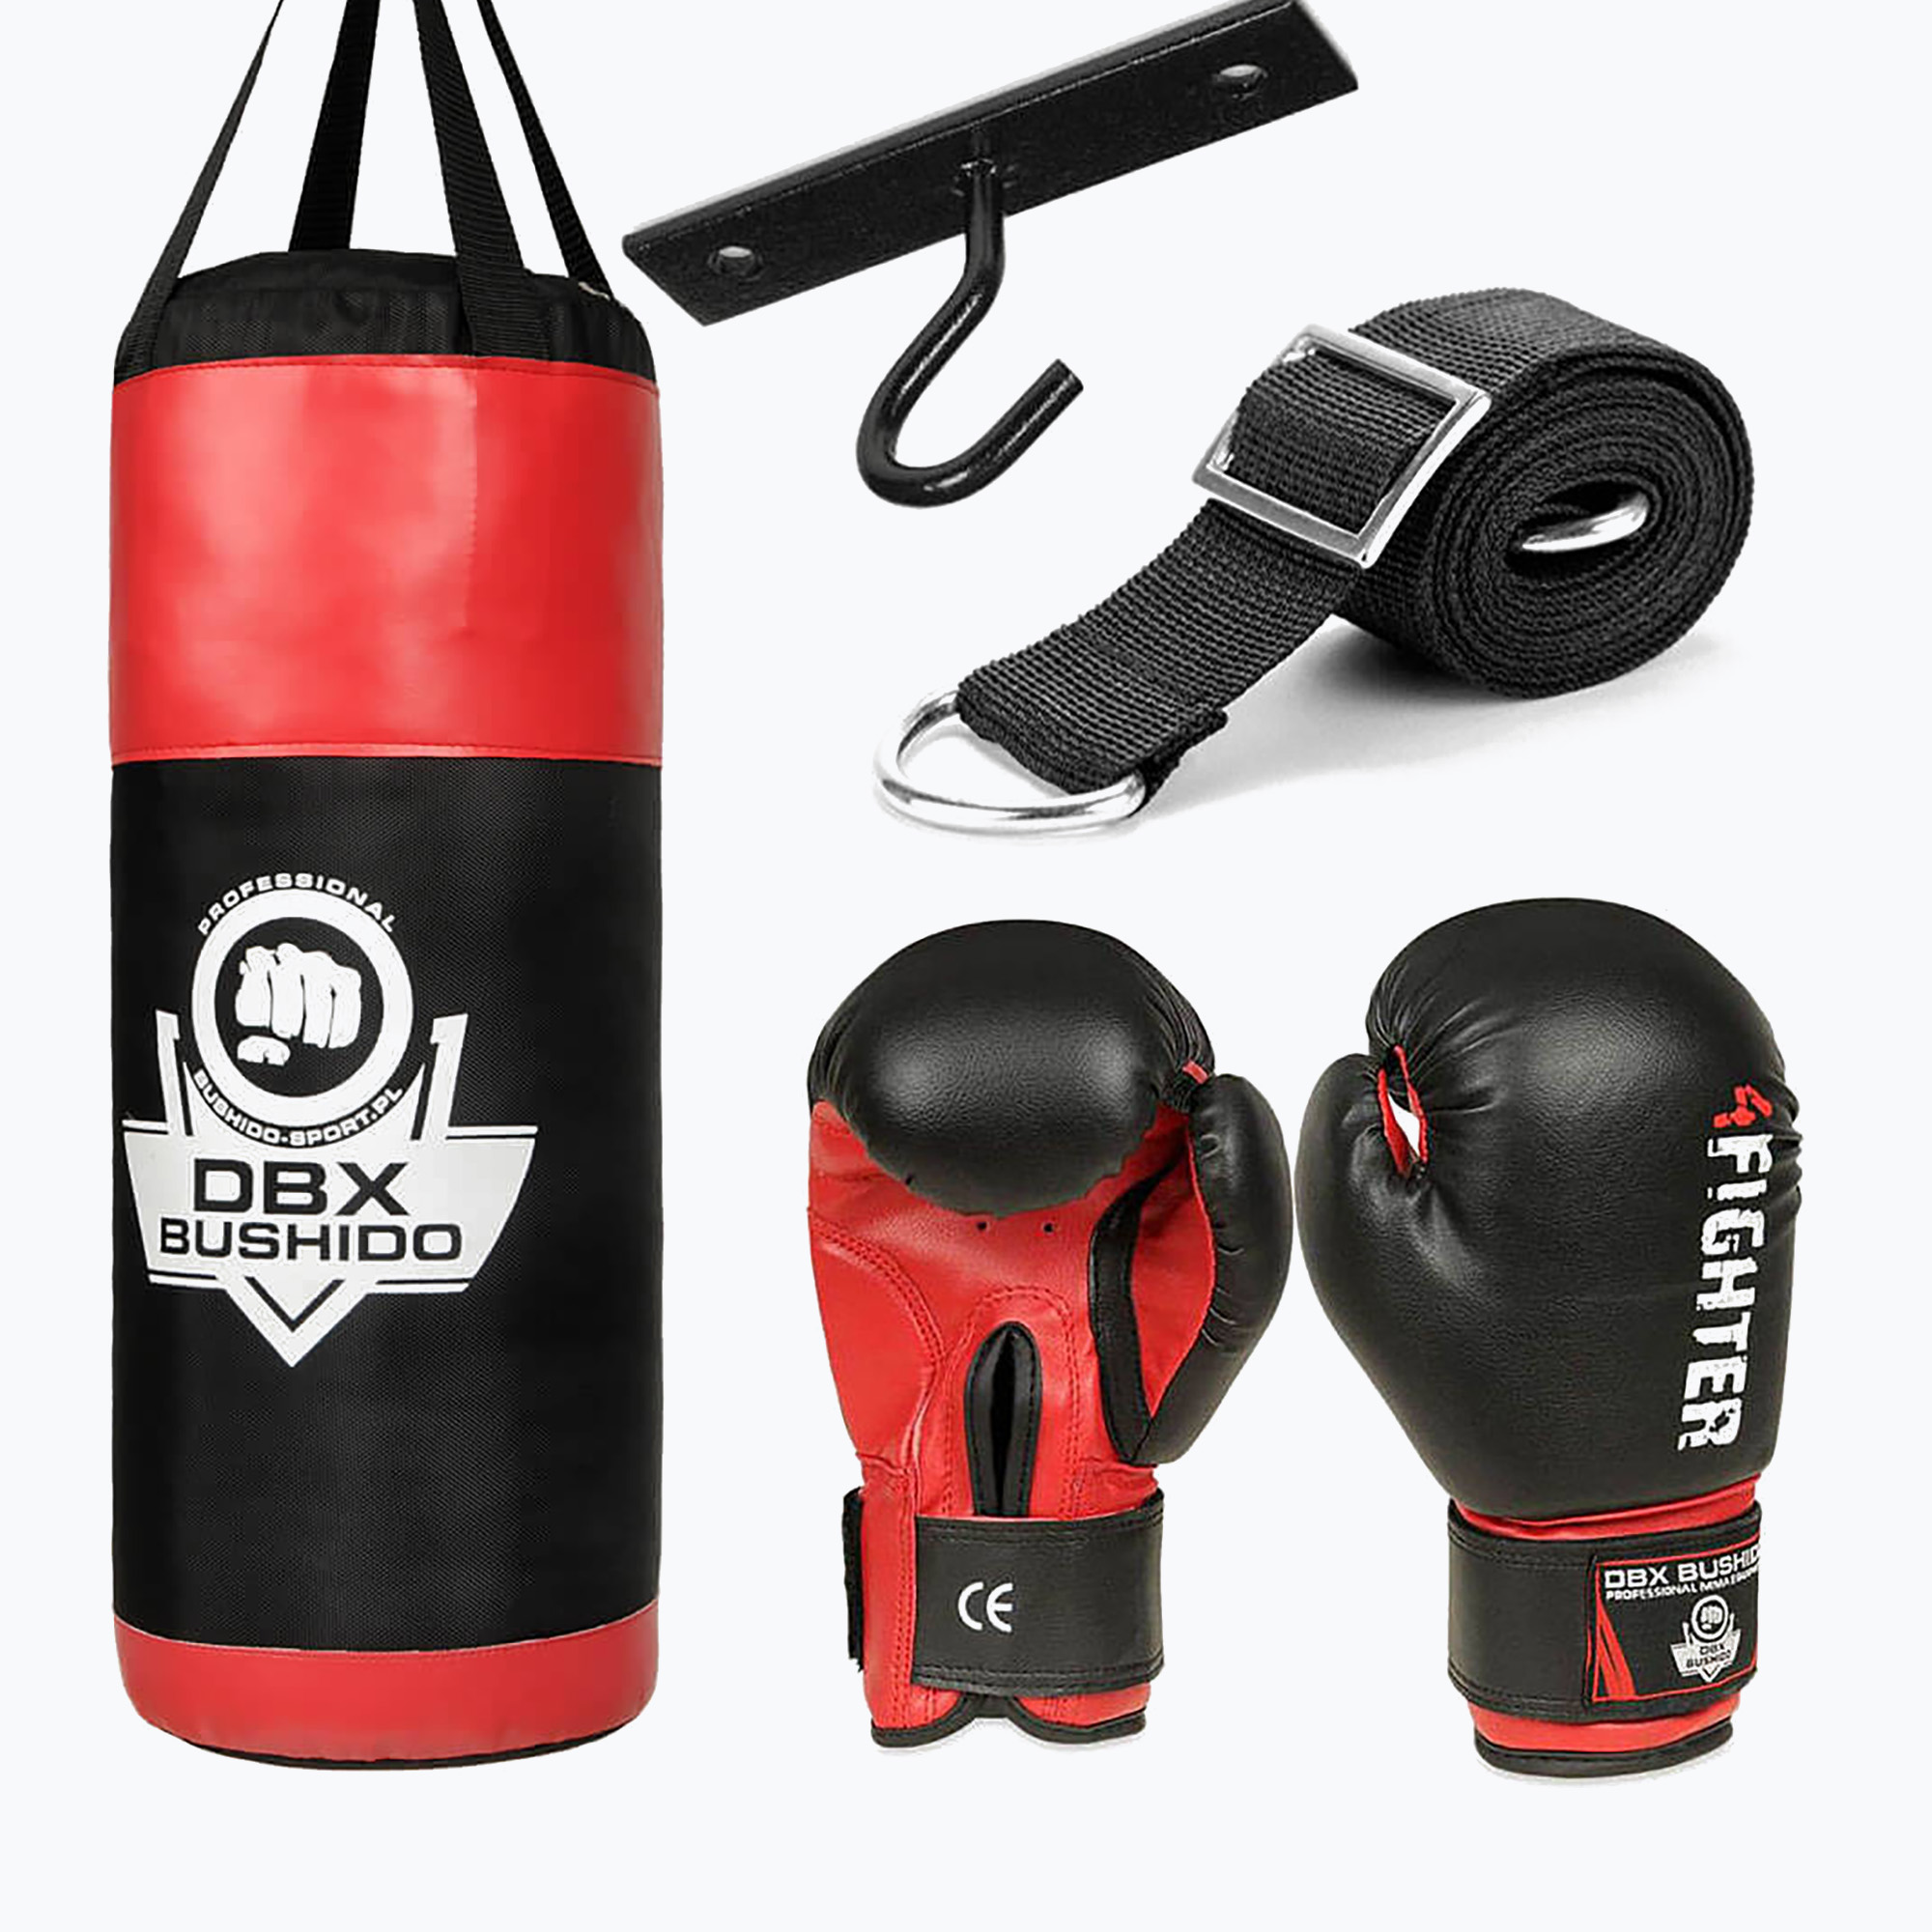 Bushido DBX Детски боксов комплект черен и червен KIDS60SET